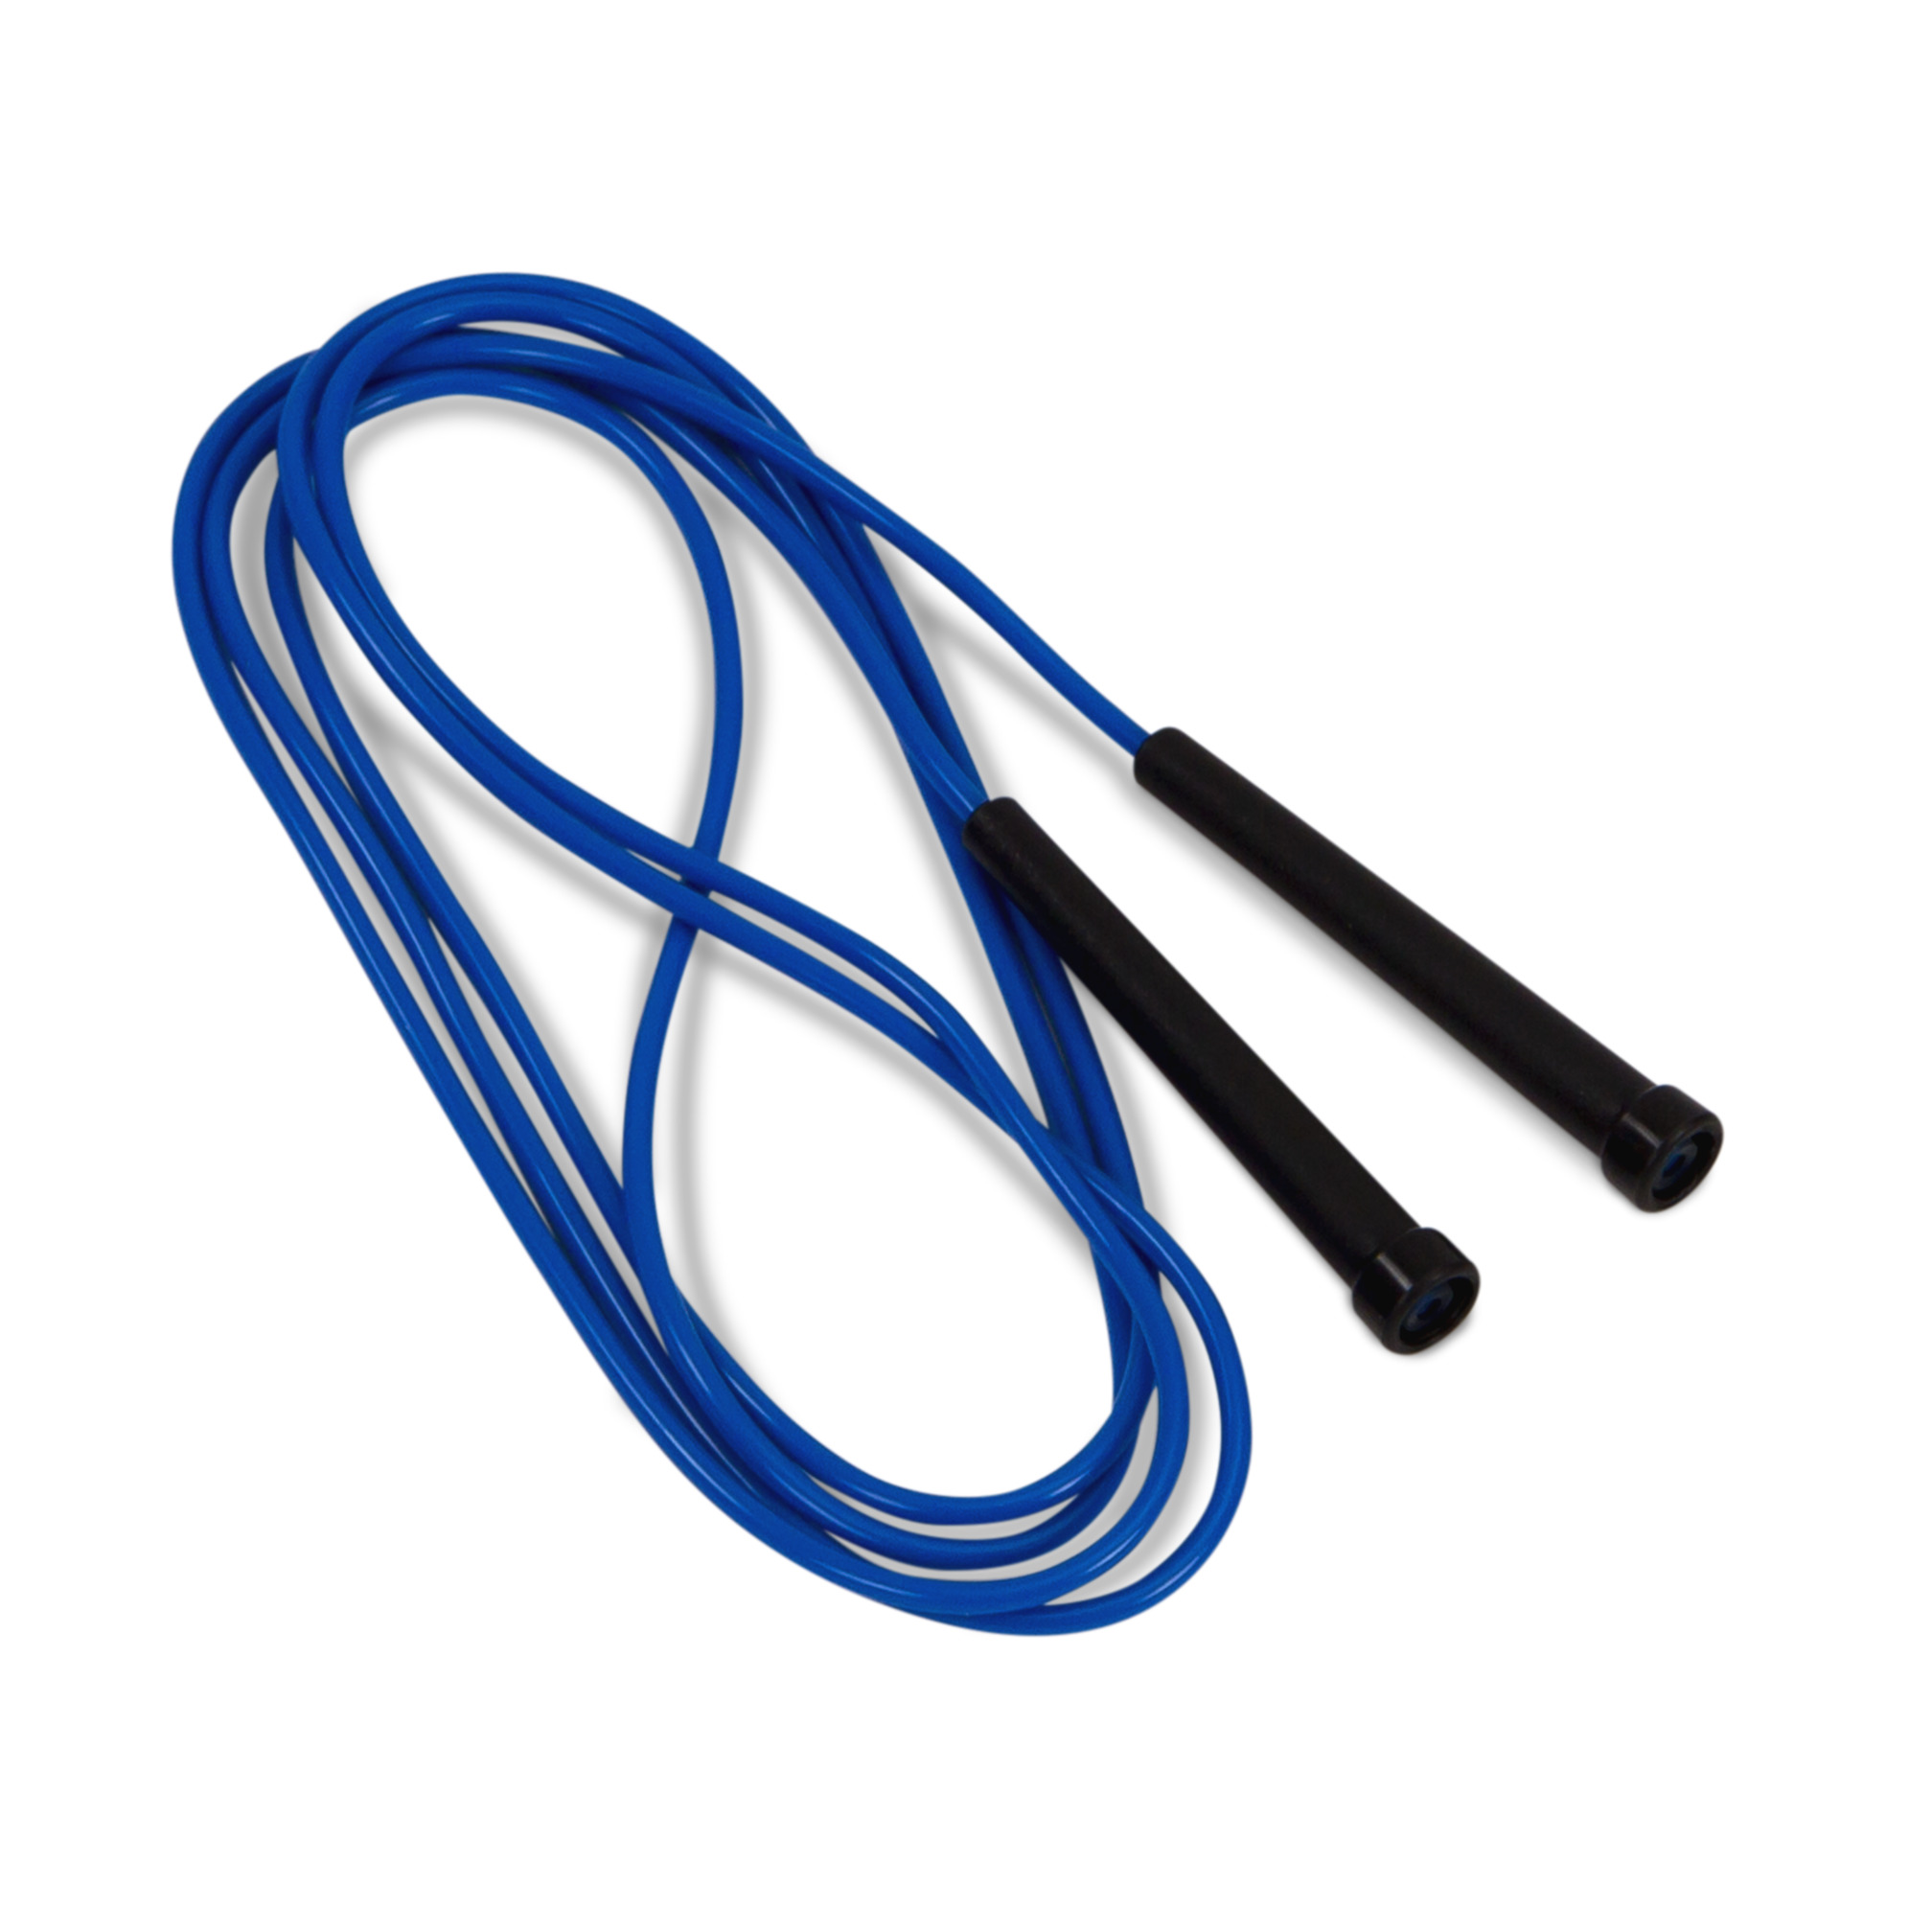 Corde rope skipping, 300 cm - bleu